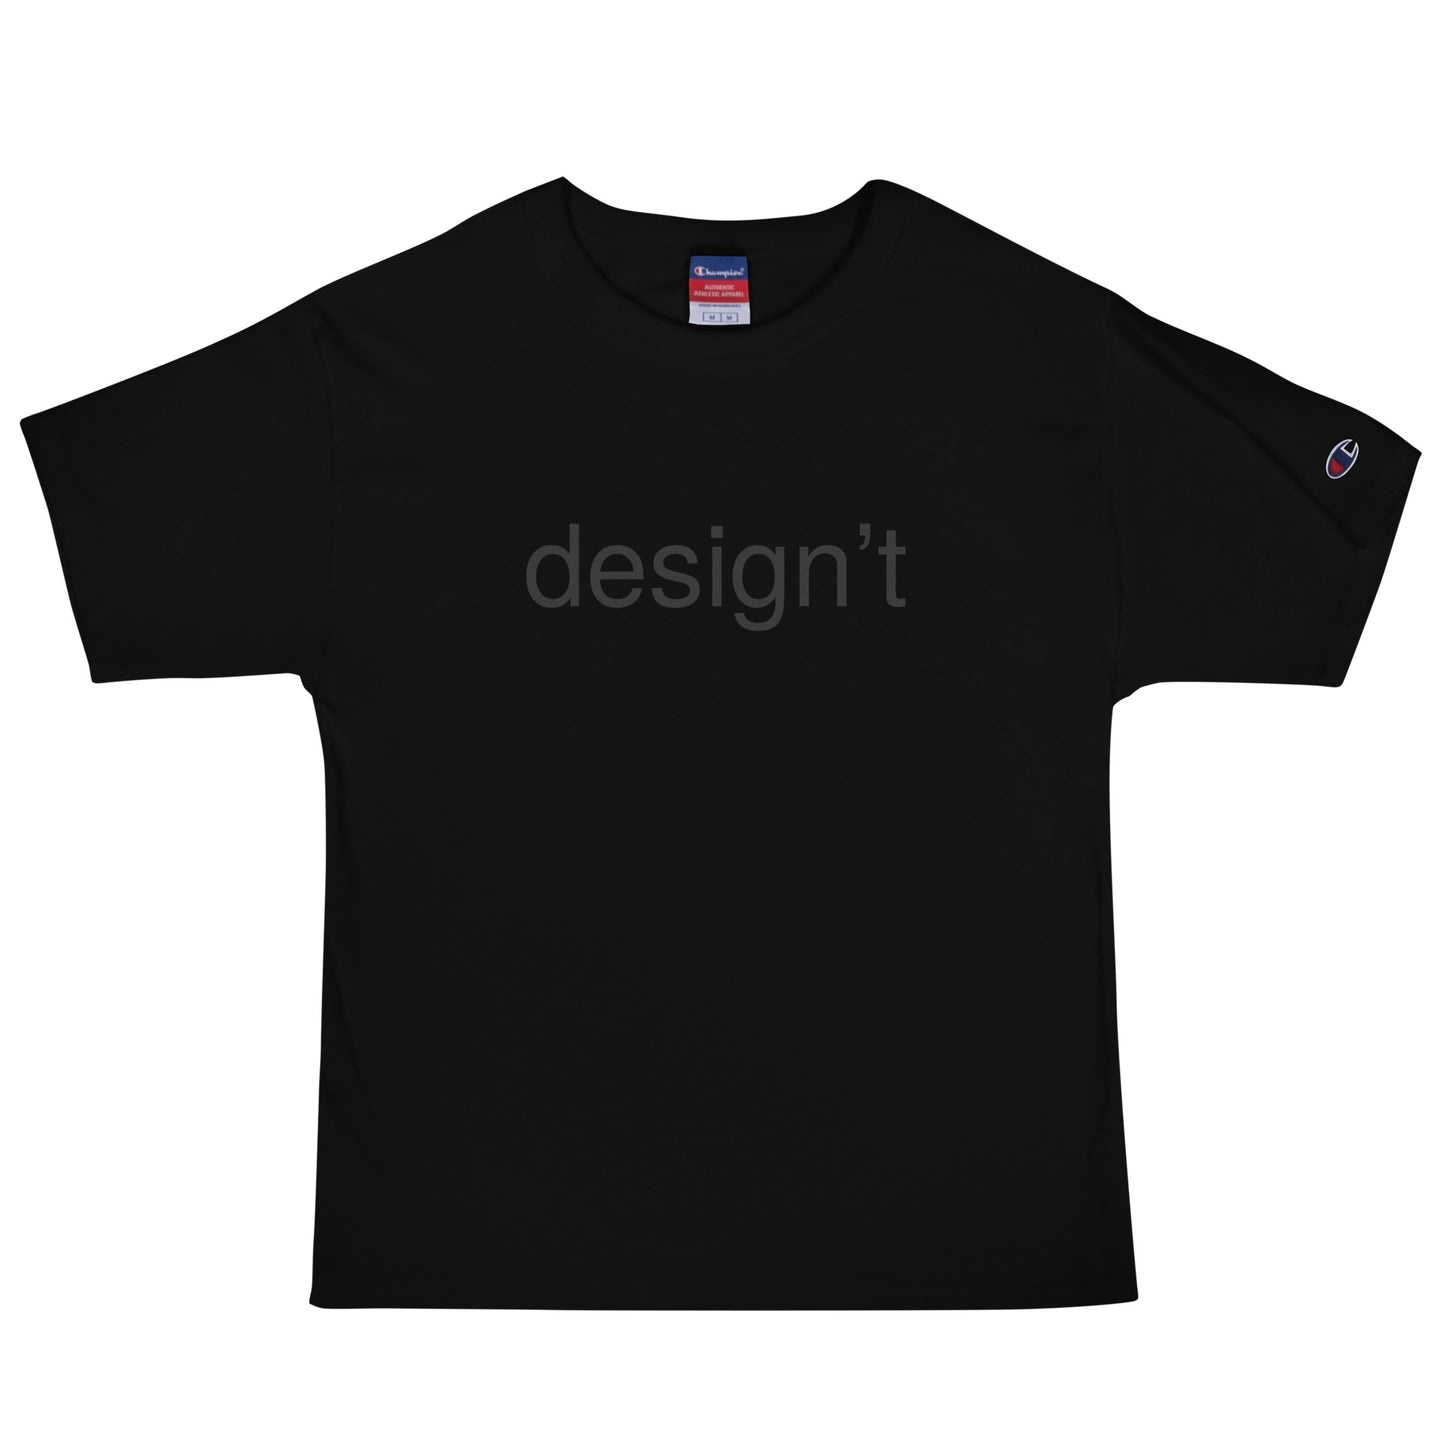 design't Champion T-Shirt